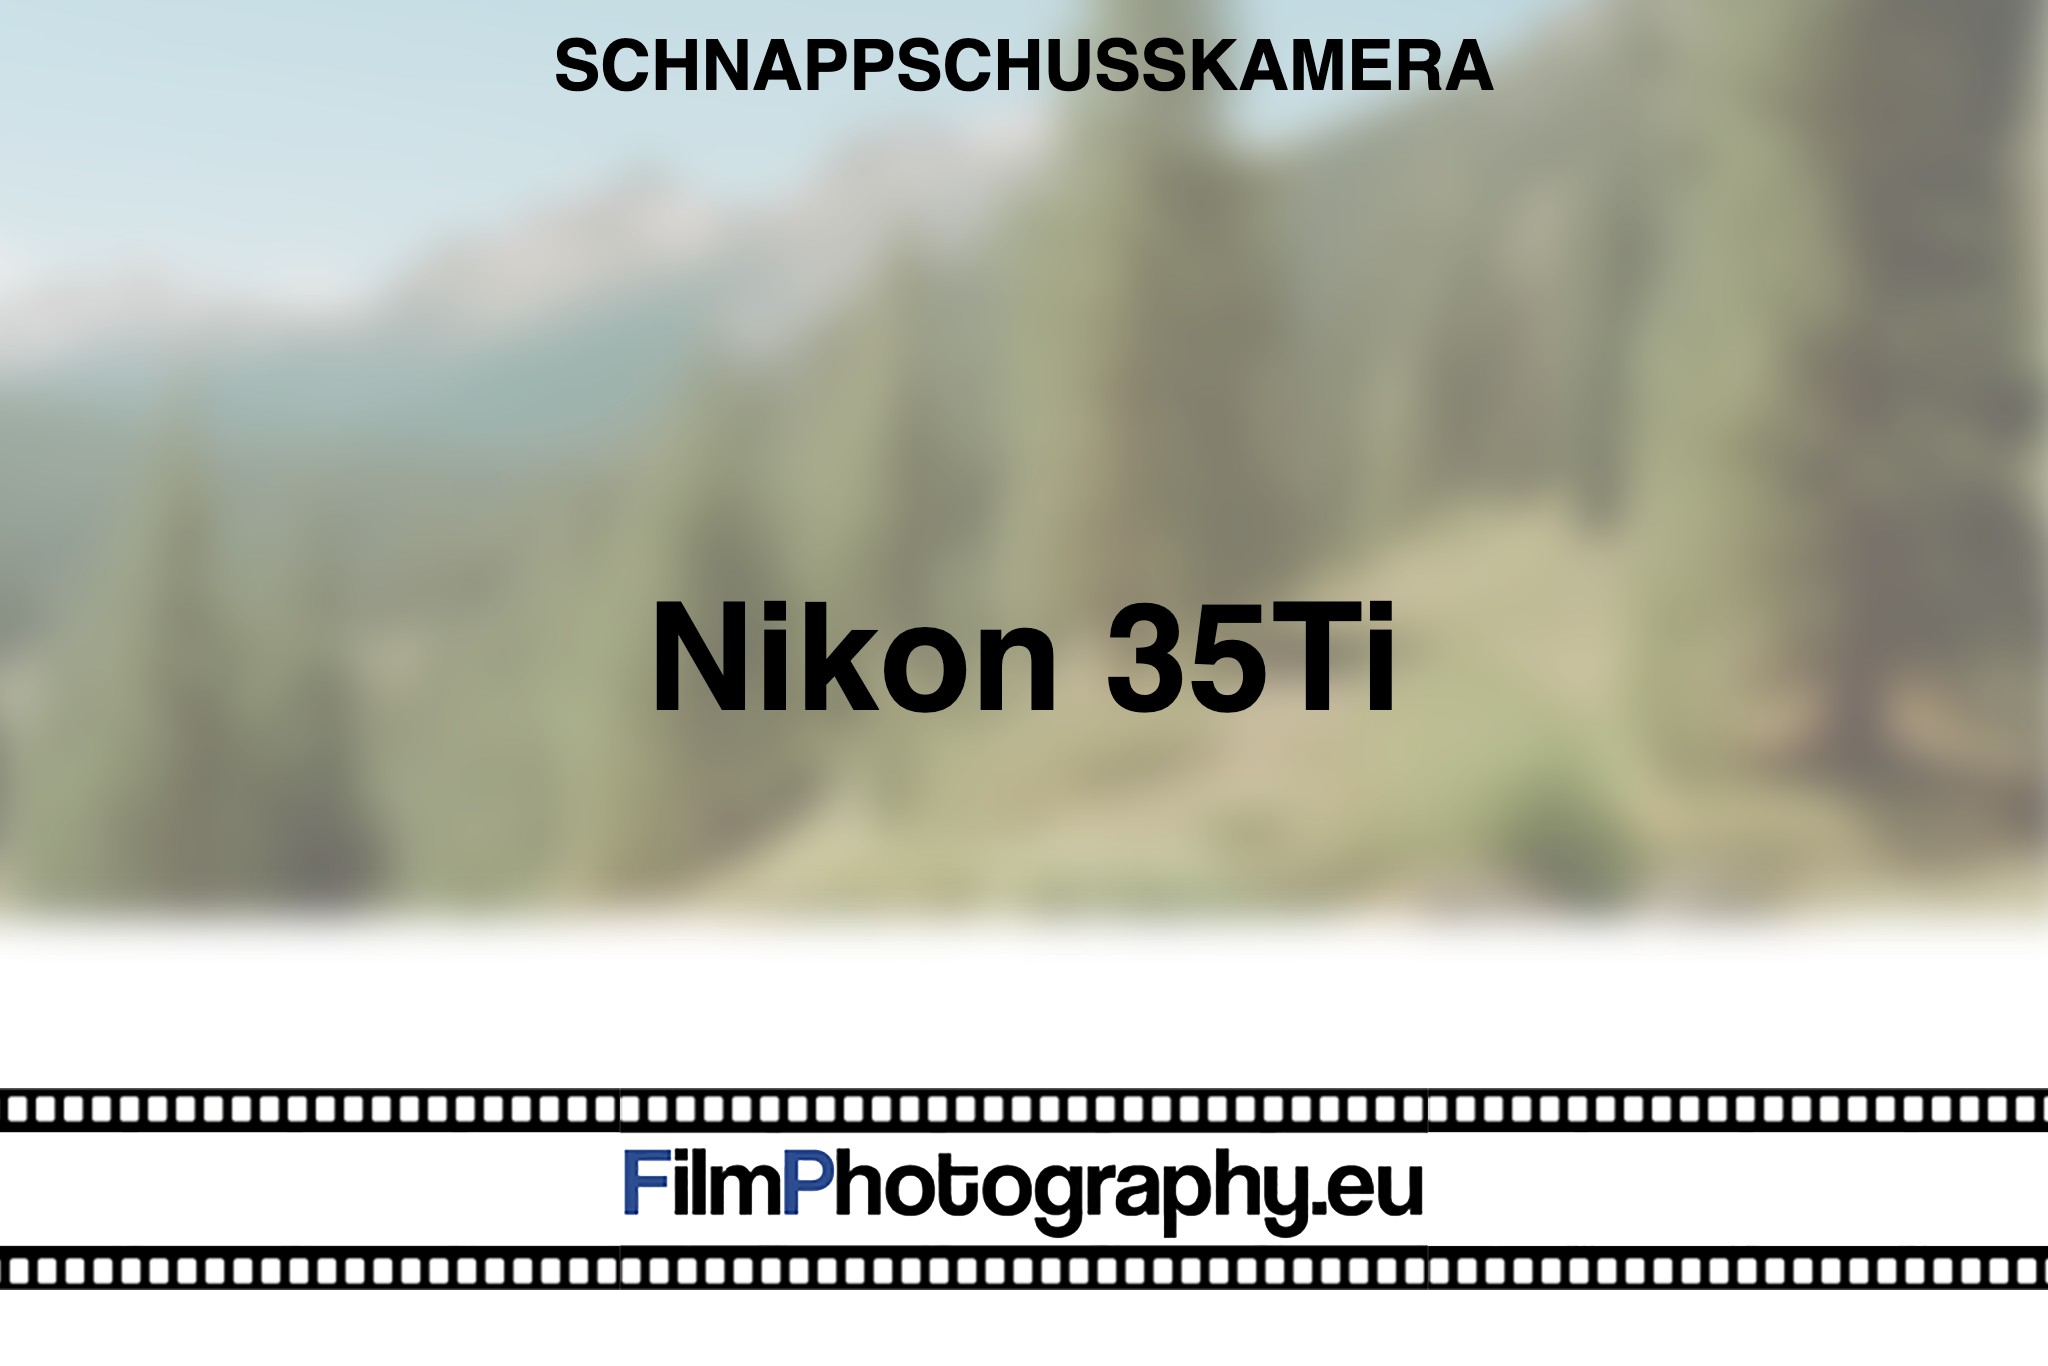 nikon-35ti-schnappschusskamera-bnv